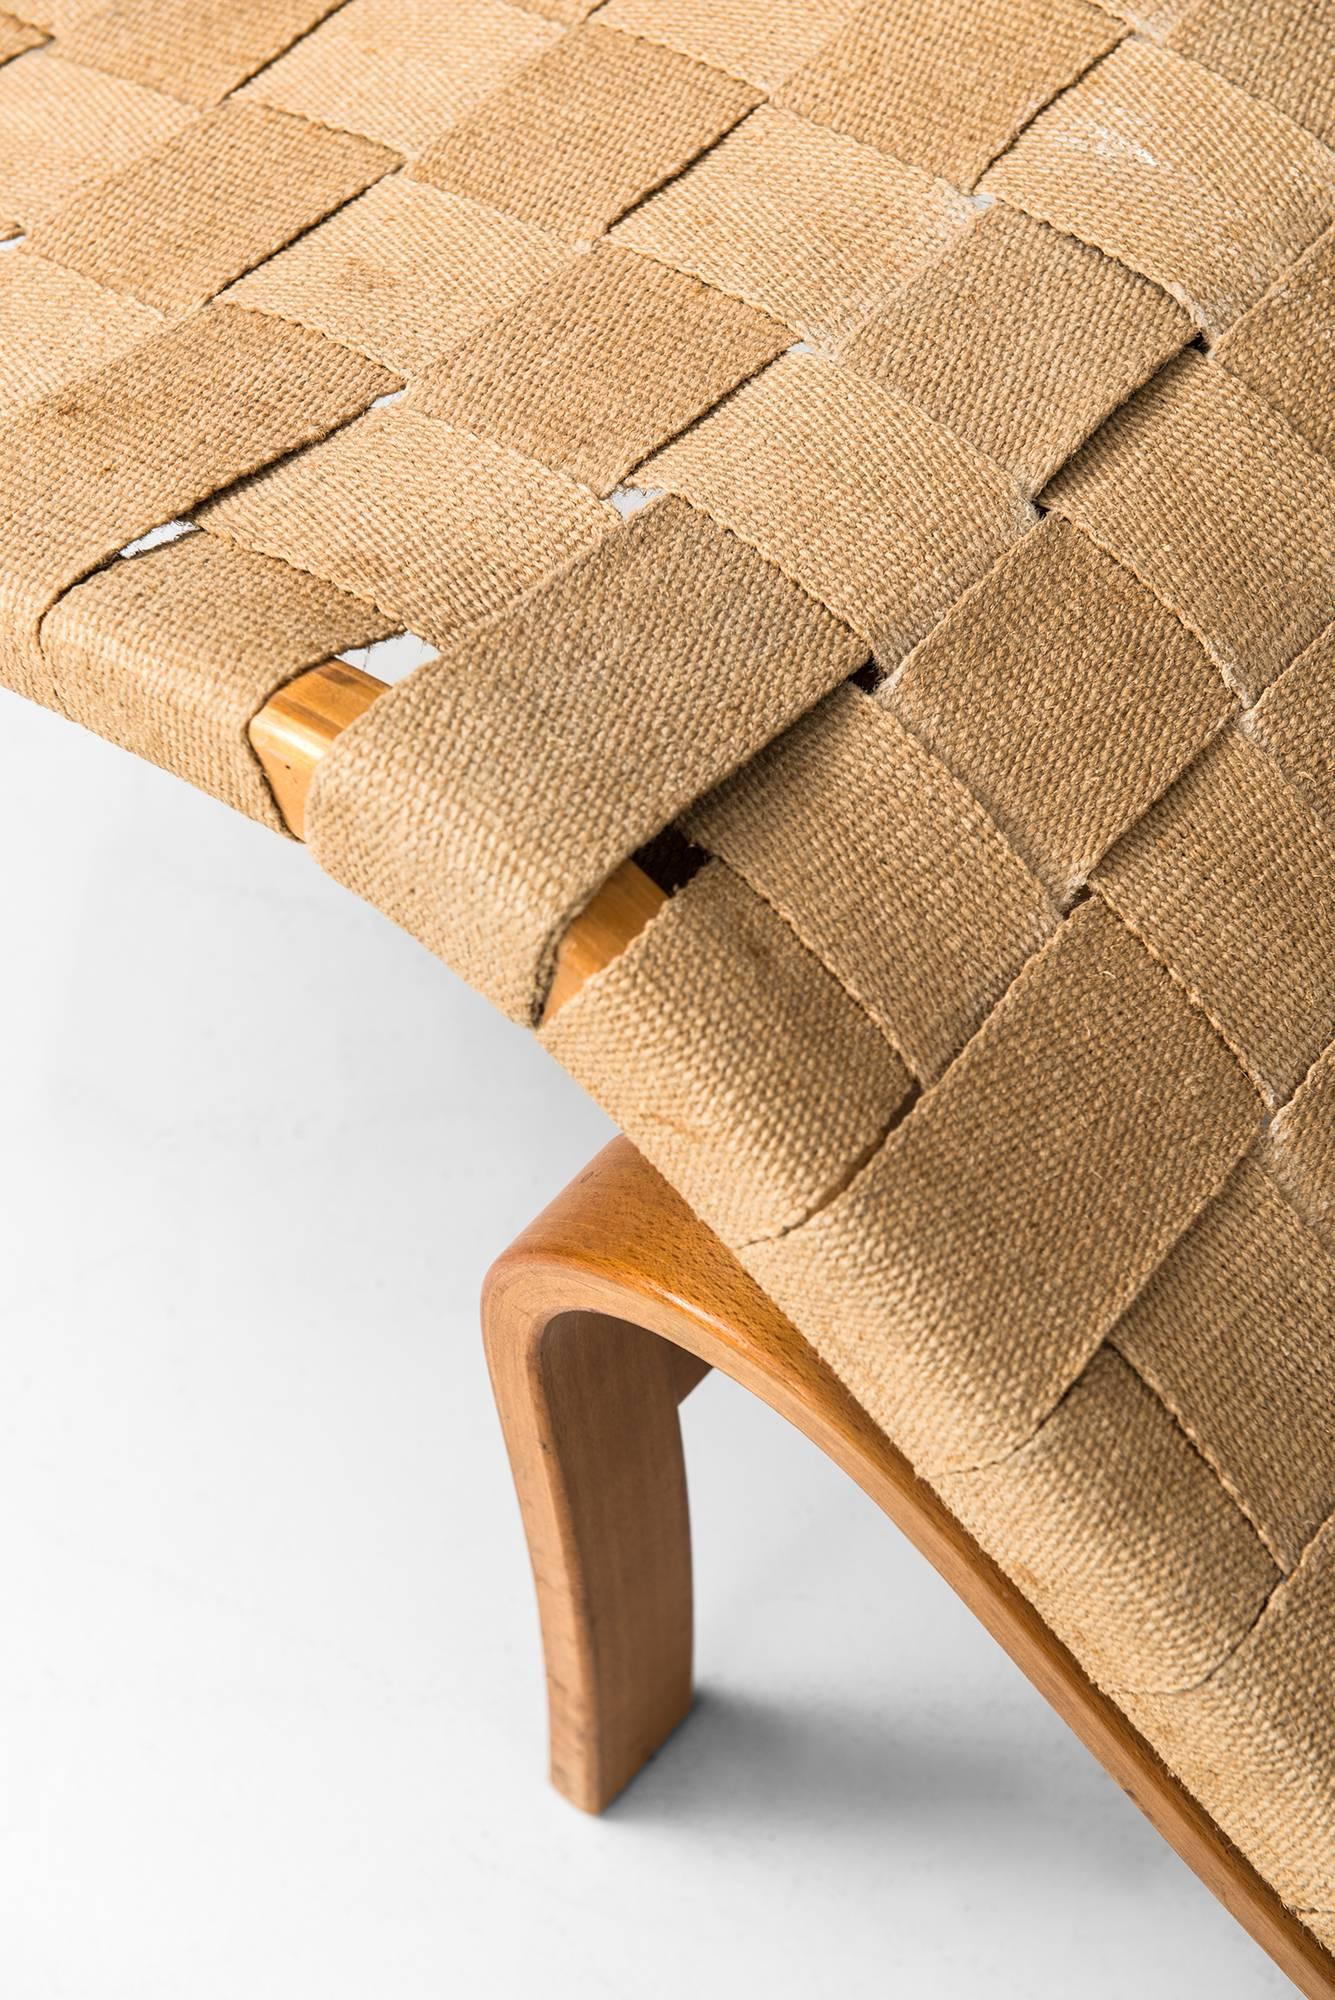 Bruno Mathsson Lounge Chair Model 36 by Karl Mathsson in Sweden 3